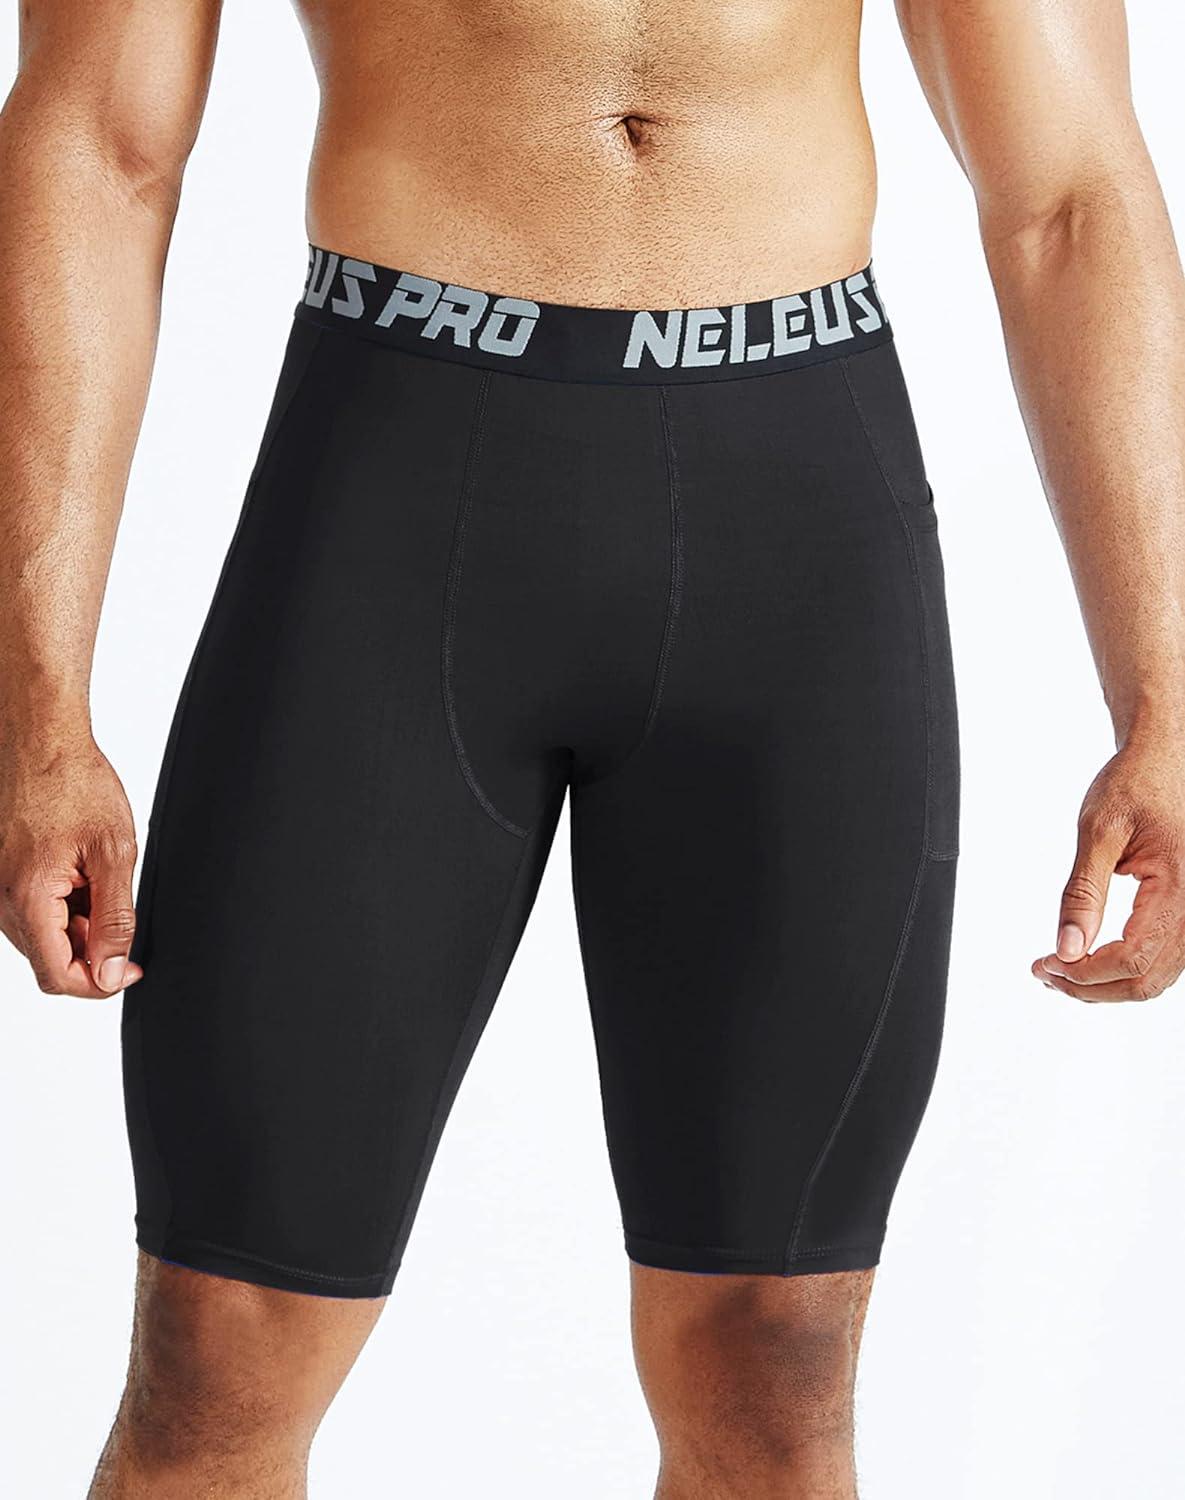 NELEUS Men's Compression Short with Pocket Dry Fit Yoga Shorts